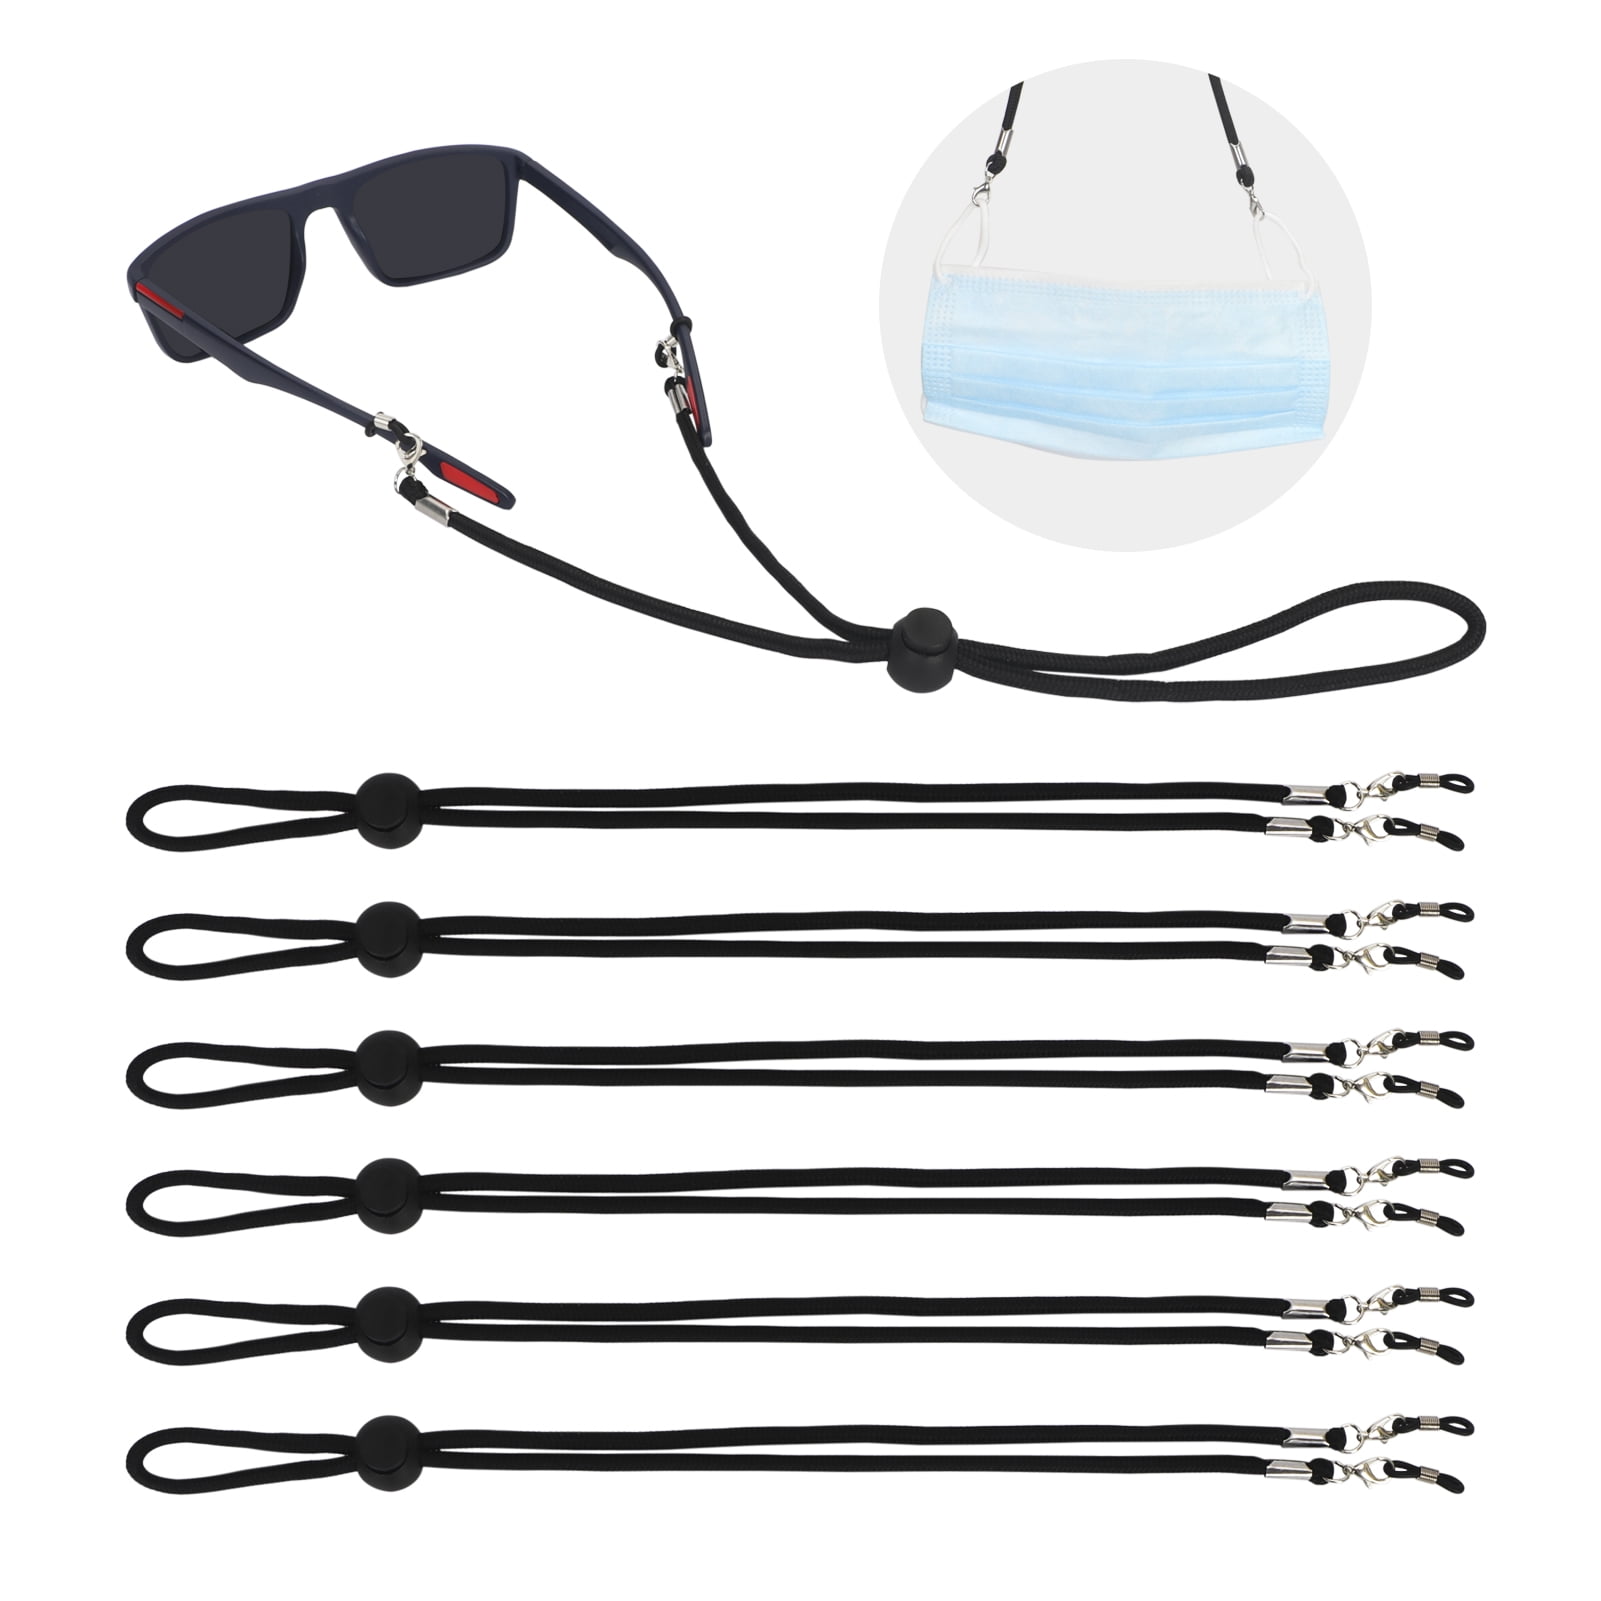 Toplive Eye Glasses String Strap [6 Pack] Universal Sport